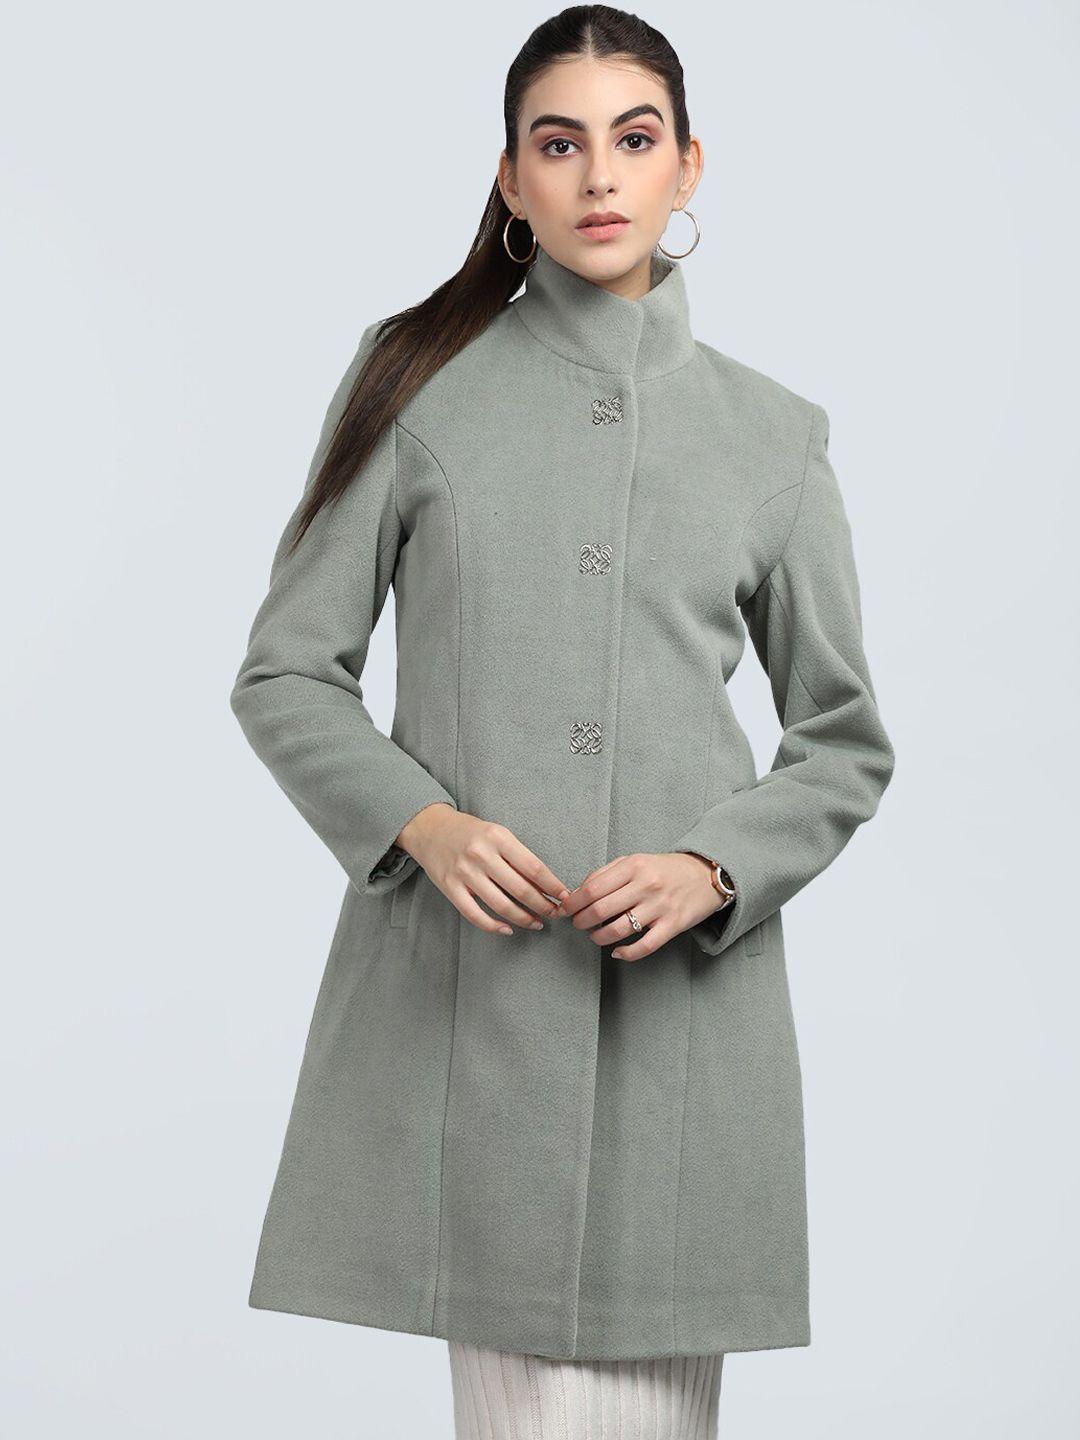 protex textured single breasted woollen long line overcoat